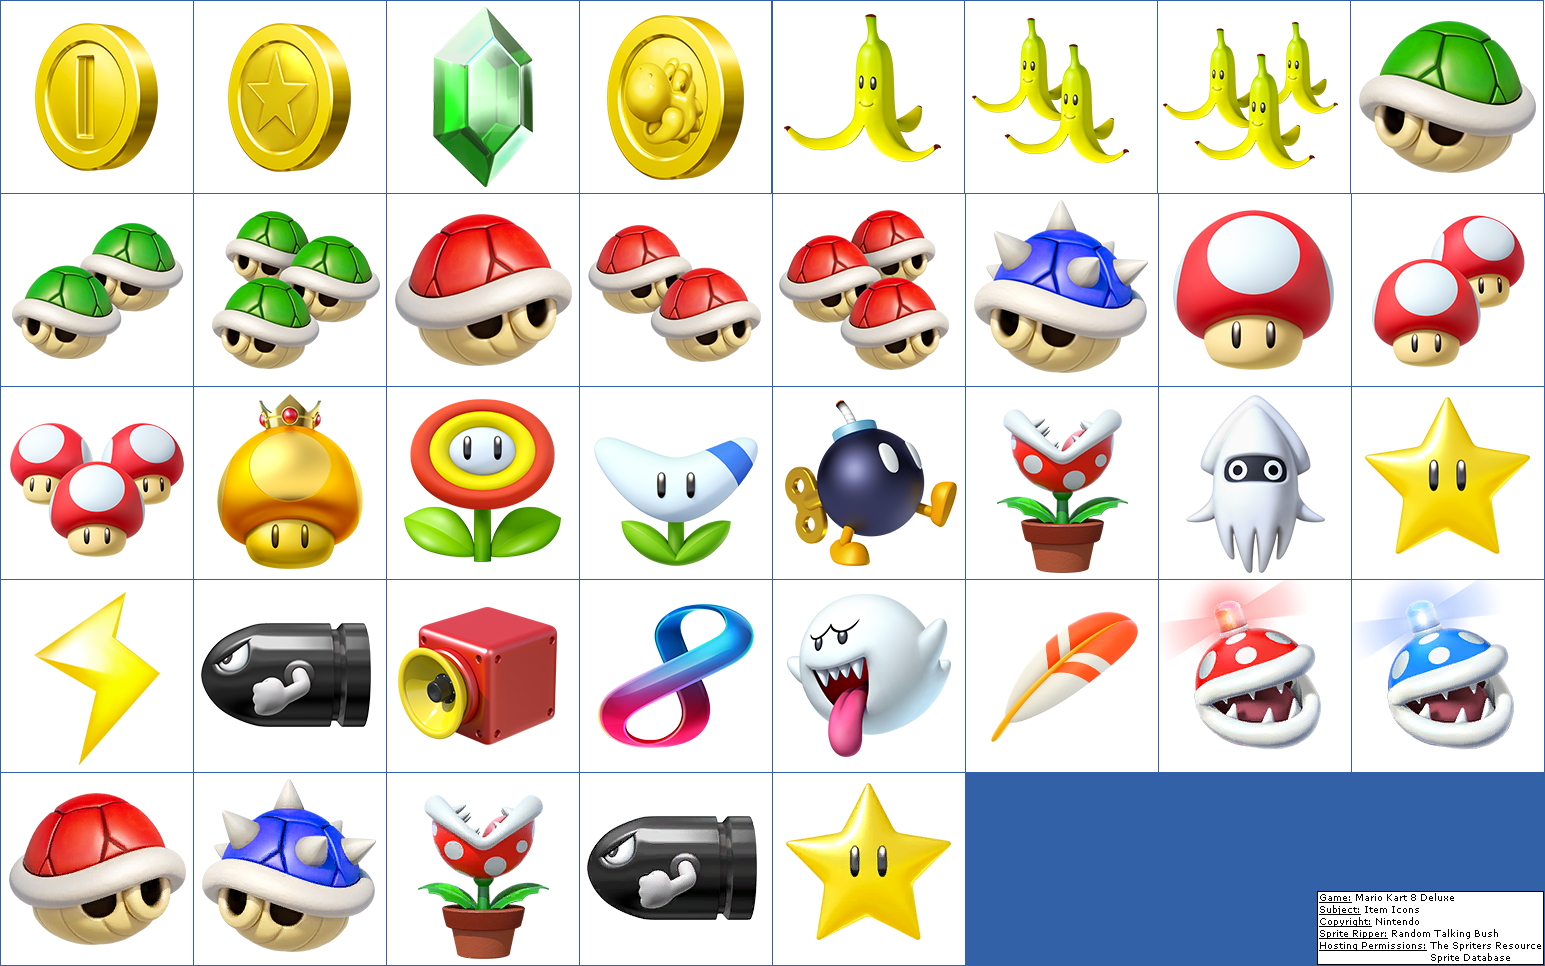 Mario Kart 8 Deluxe - Item Icons